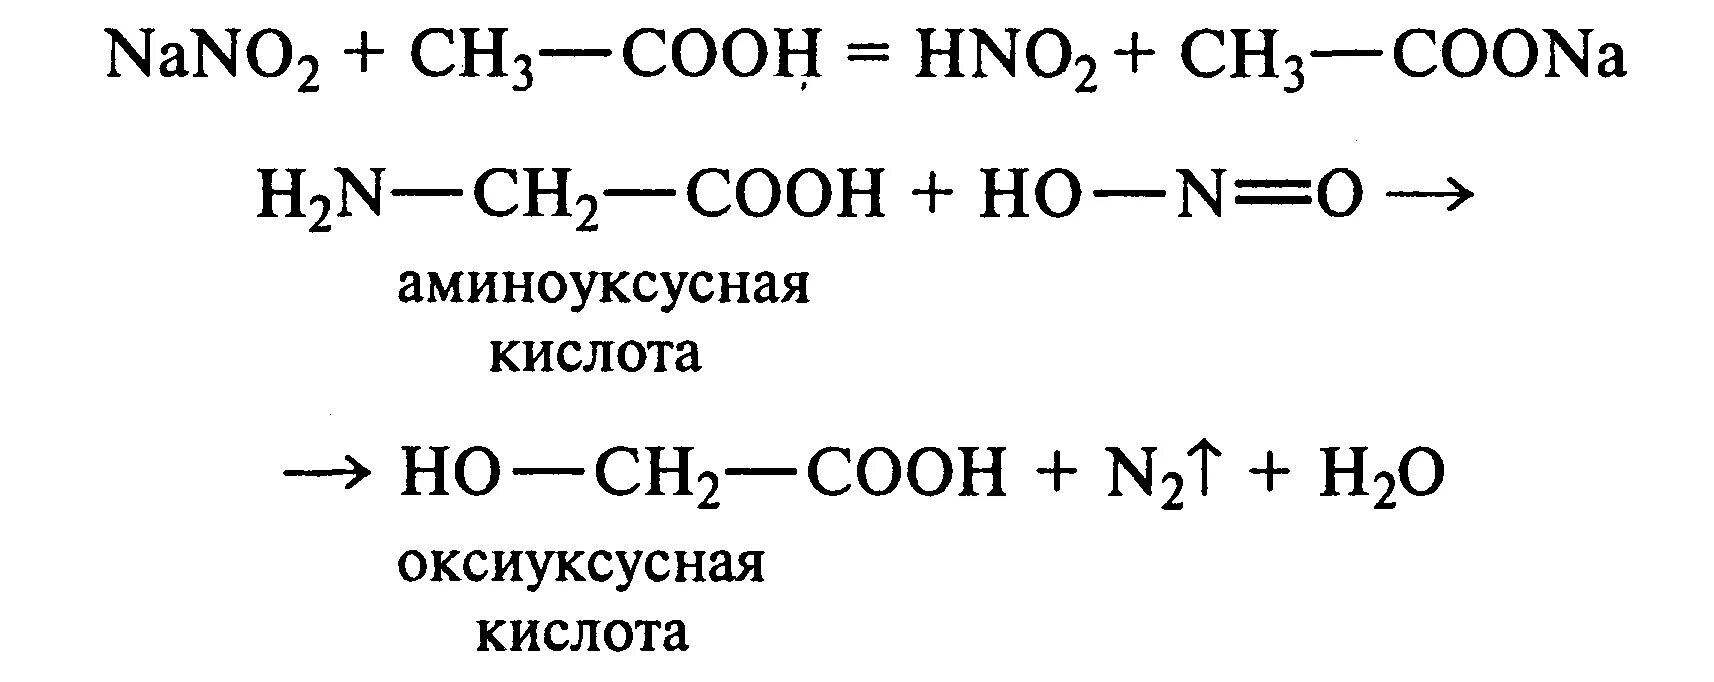 Аминоуксусная кислота hno3. Глицин нитрит натрия уксусная кислота. Глицин нитрит натрия уксусная кислота реакция. Глицин hno3. Реакция взаимодействия уксусной кислоты и натрия